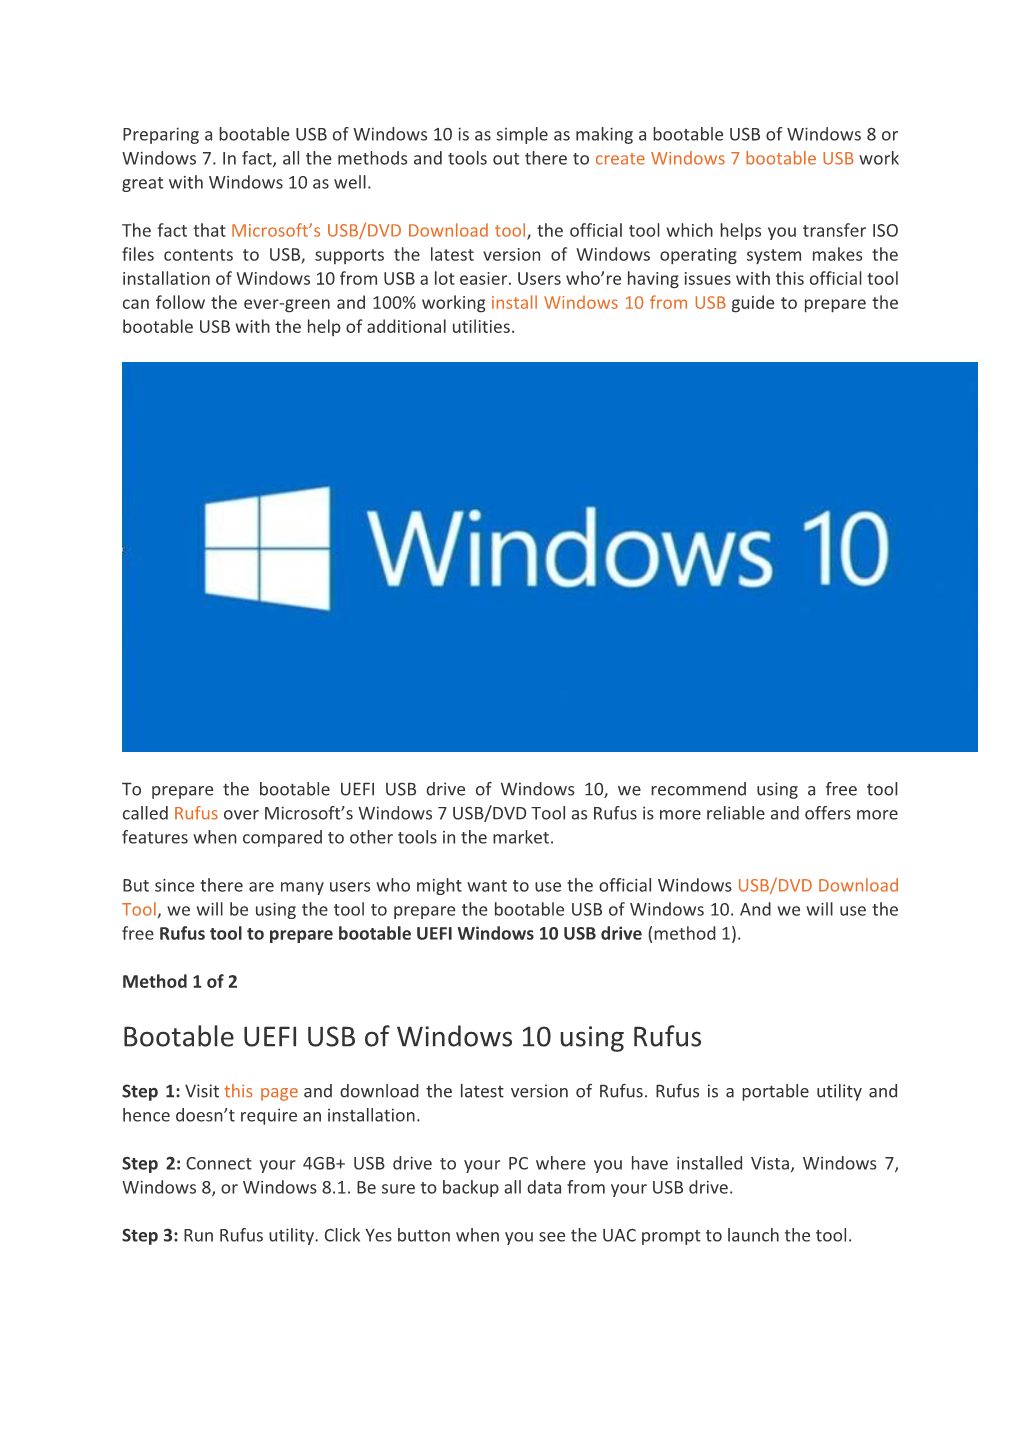 Bootable UEFI USB of Windows 10 Using Rufus